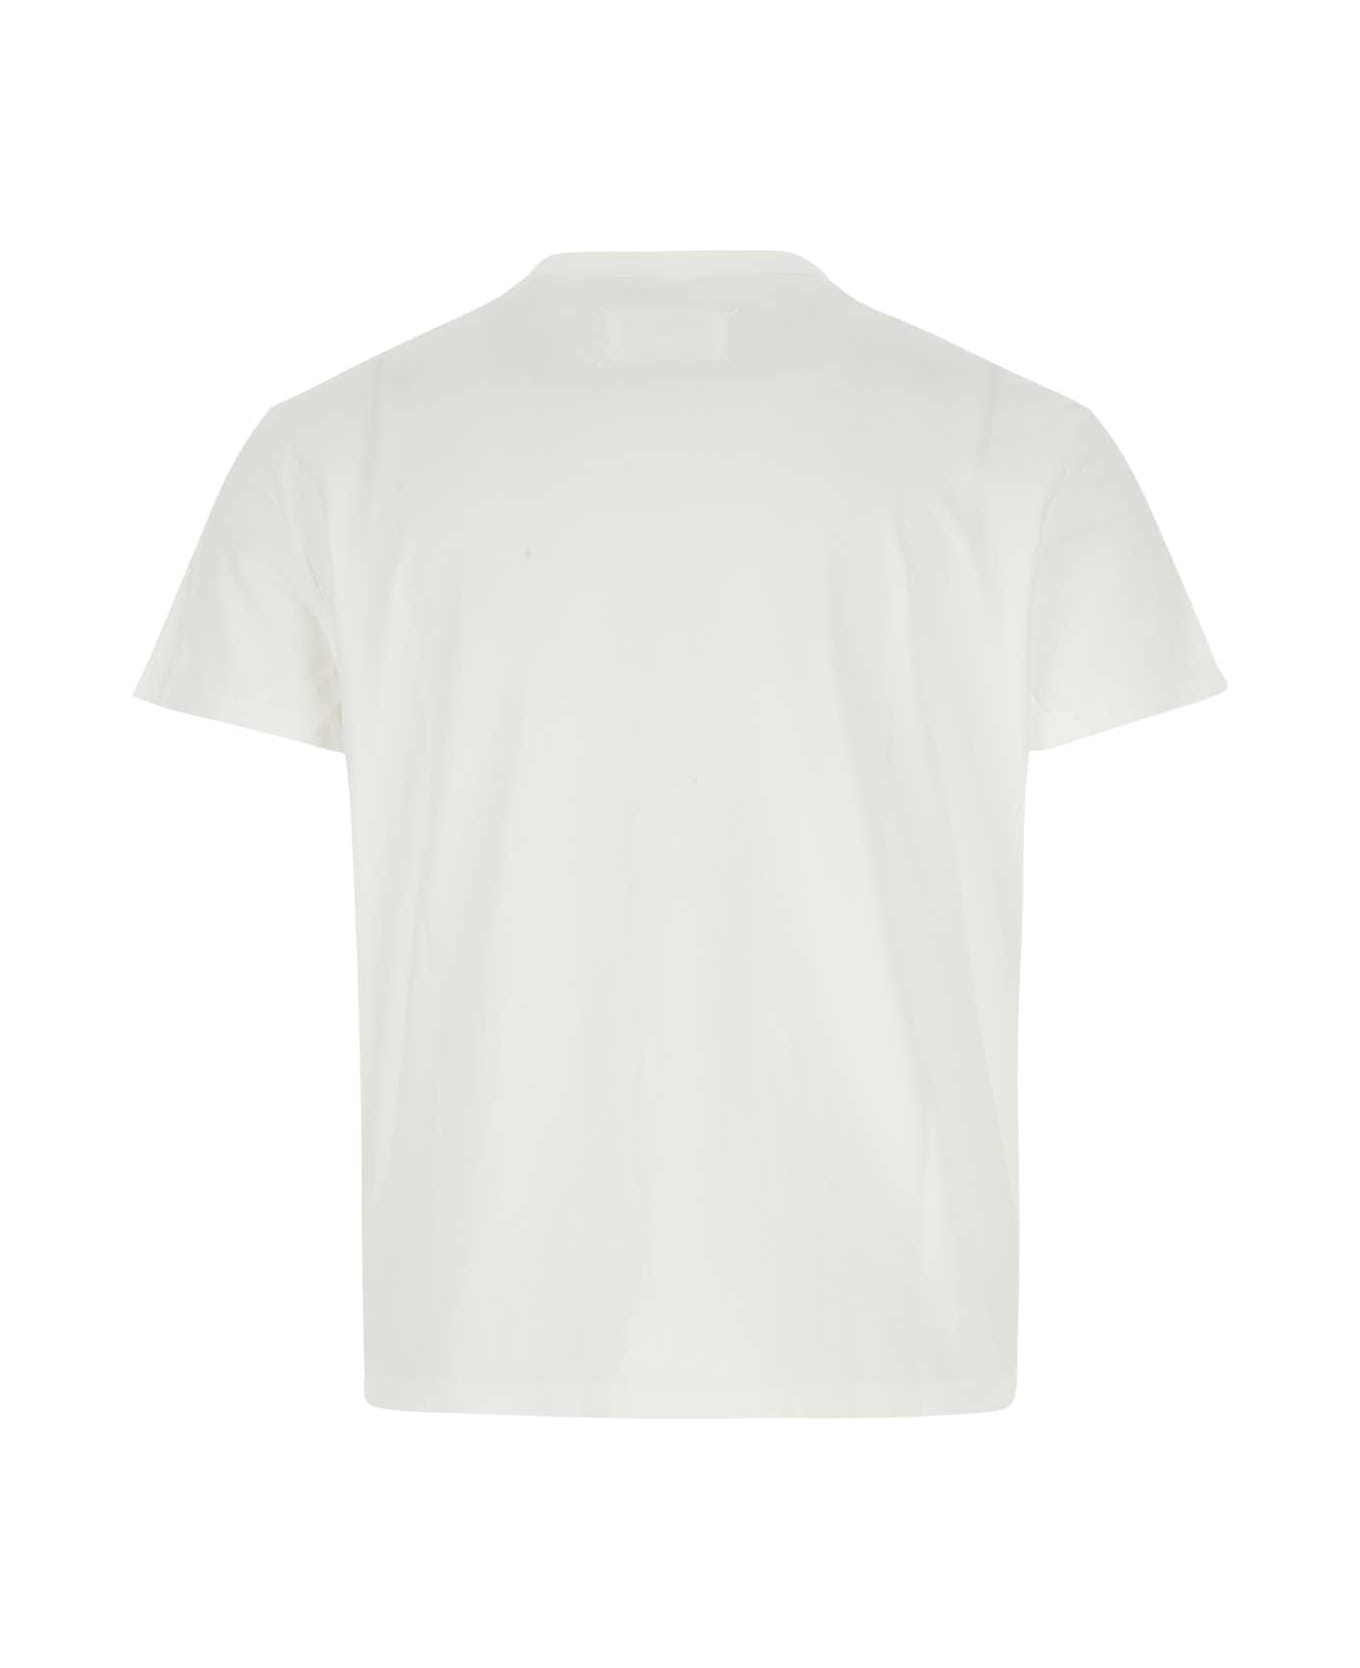 Maison Margiela T-shirt - 100 シャツ